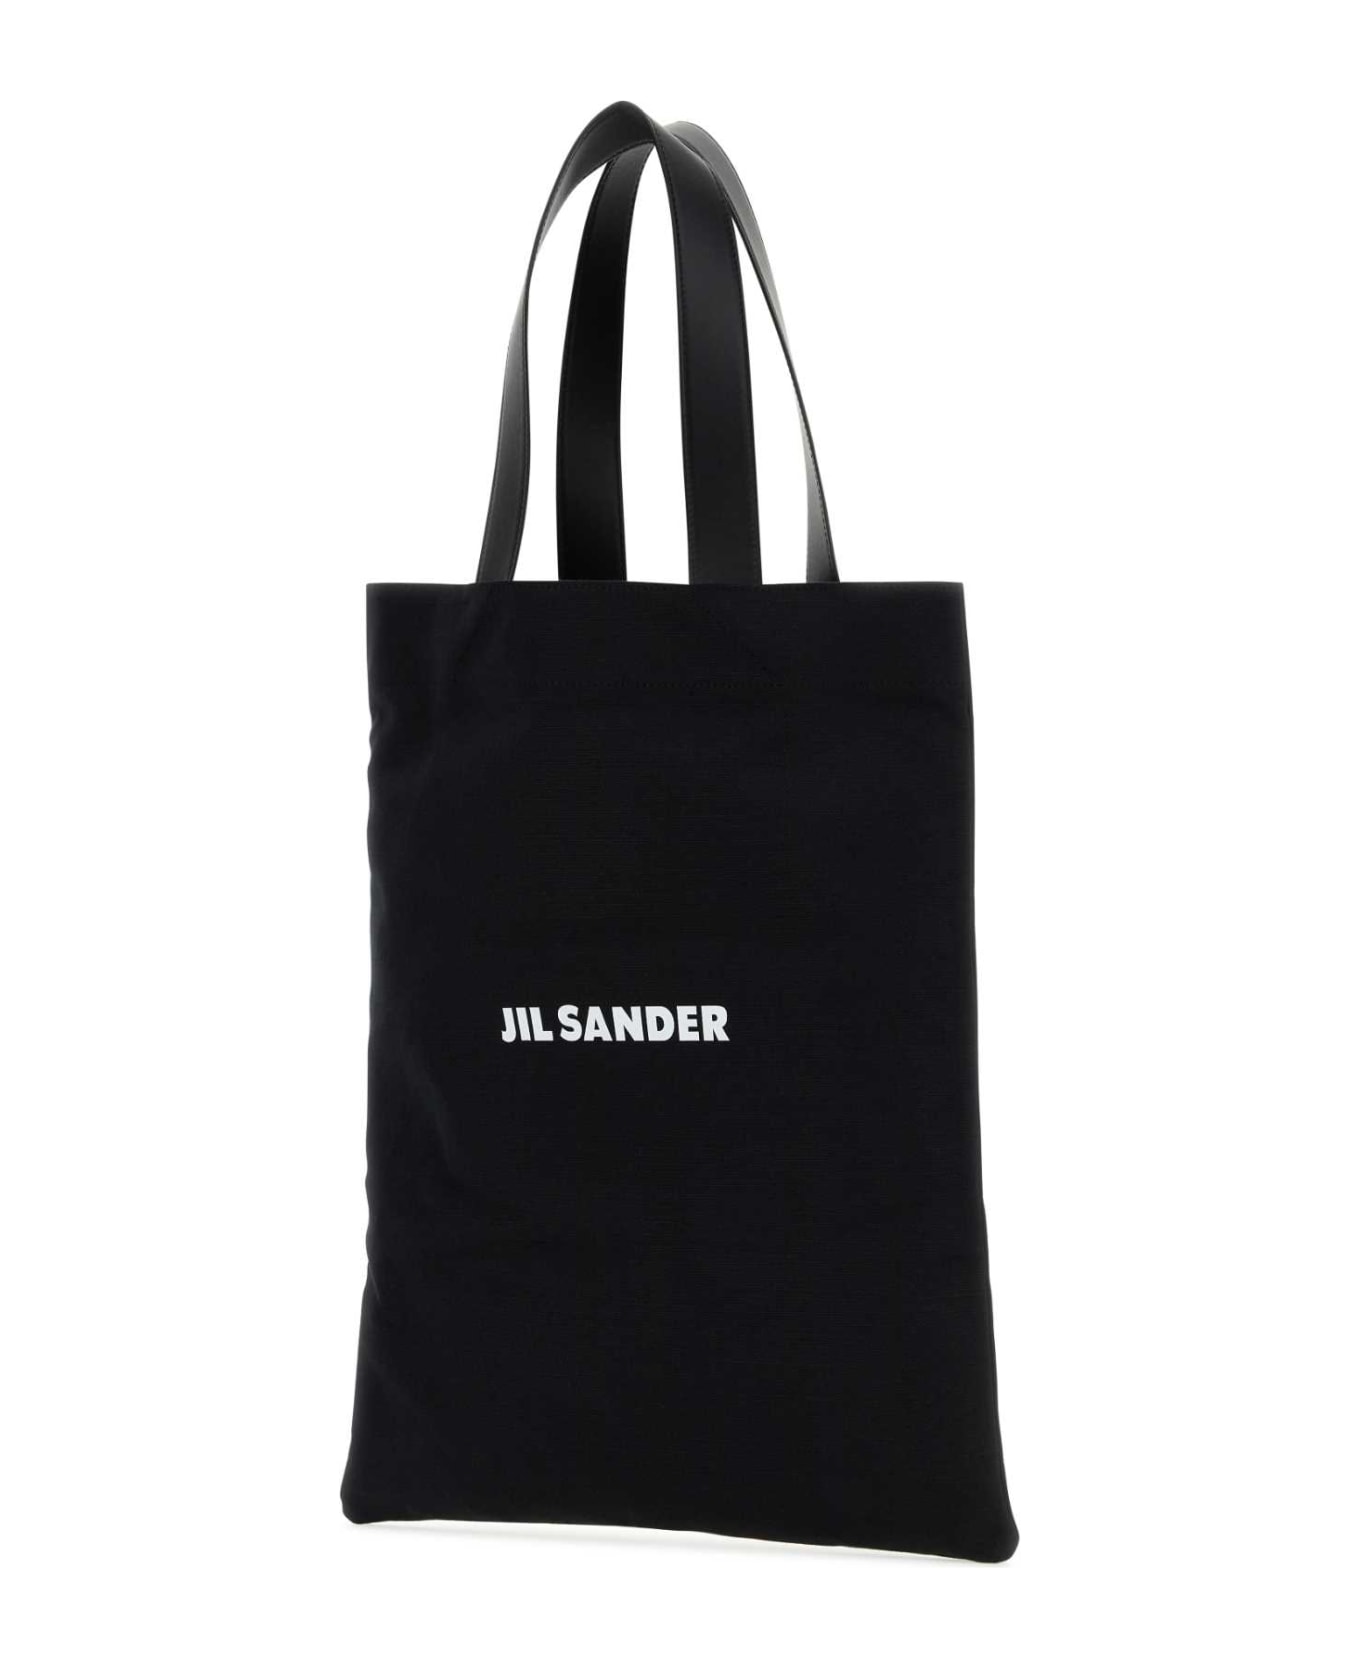 Jil Sander Black Canvas Medium Book Shopping Bag - 001